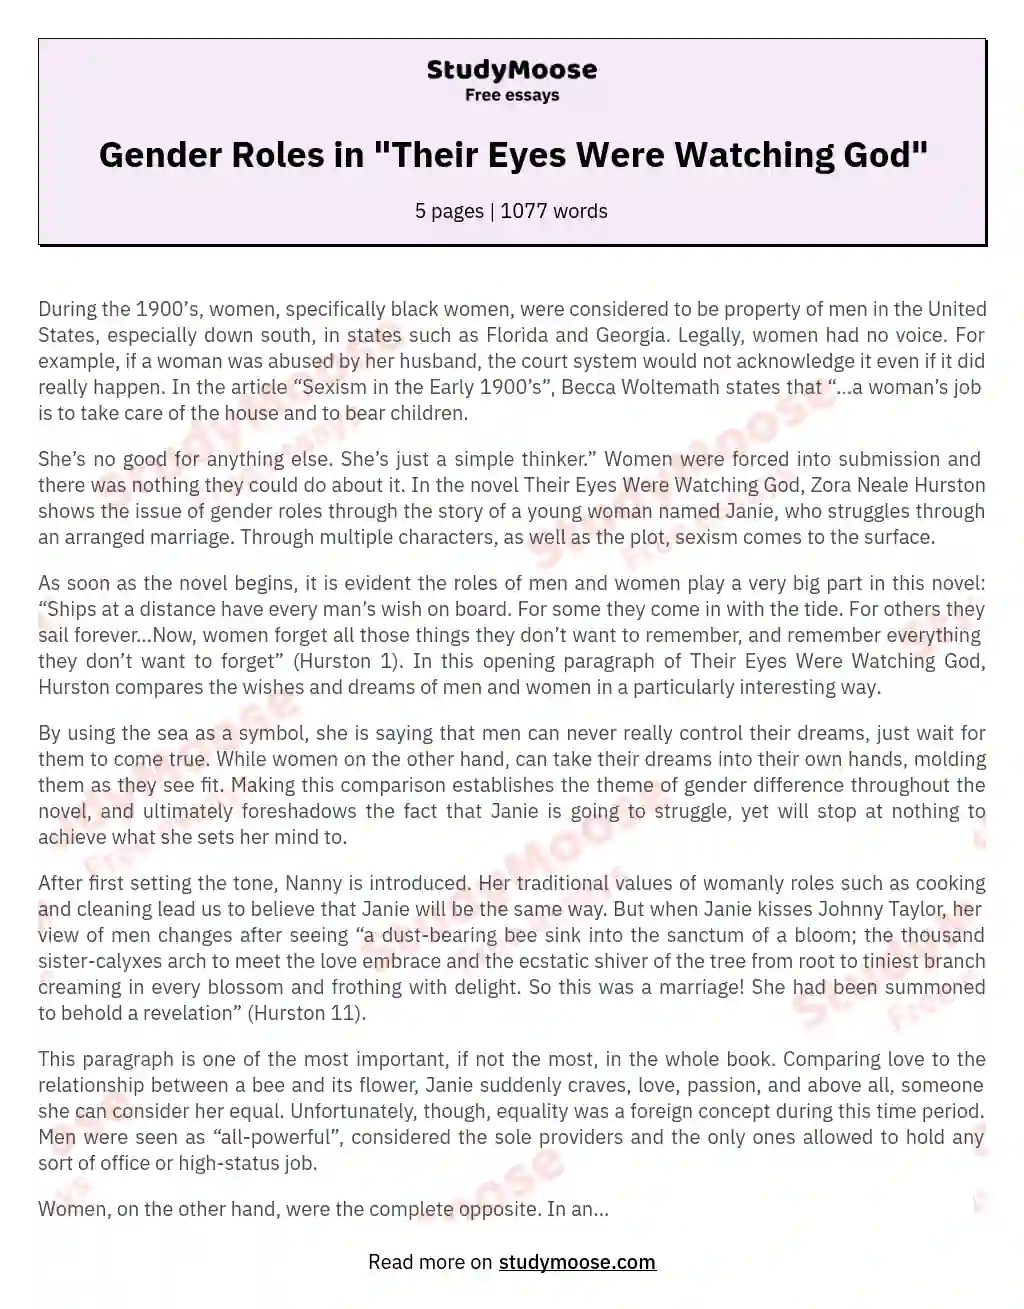 Gender Roles in "Their Eyes Were Watching God" essay